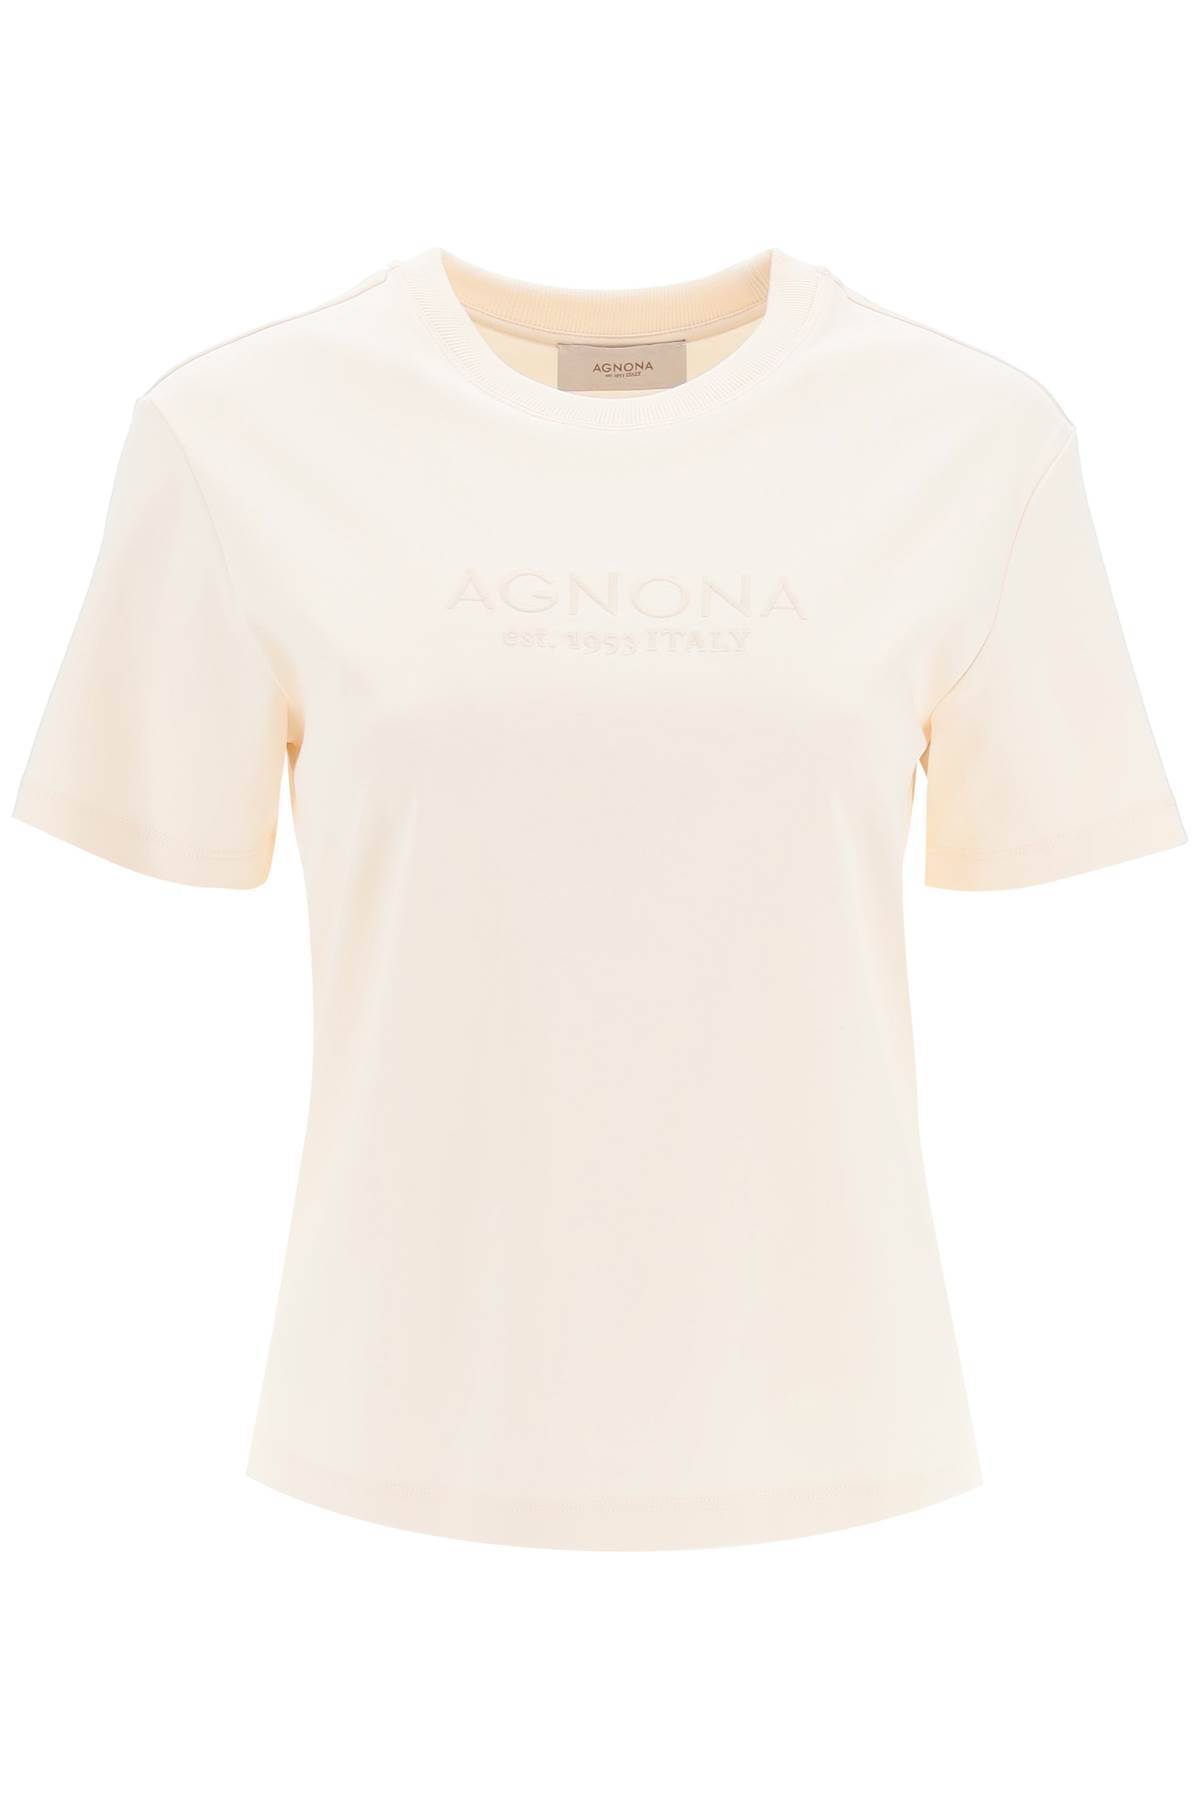 AGNONA AGNONA t-shirt with embroidered logo